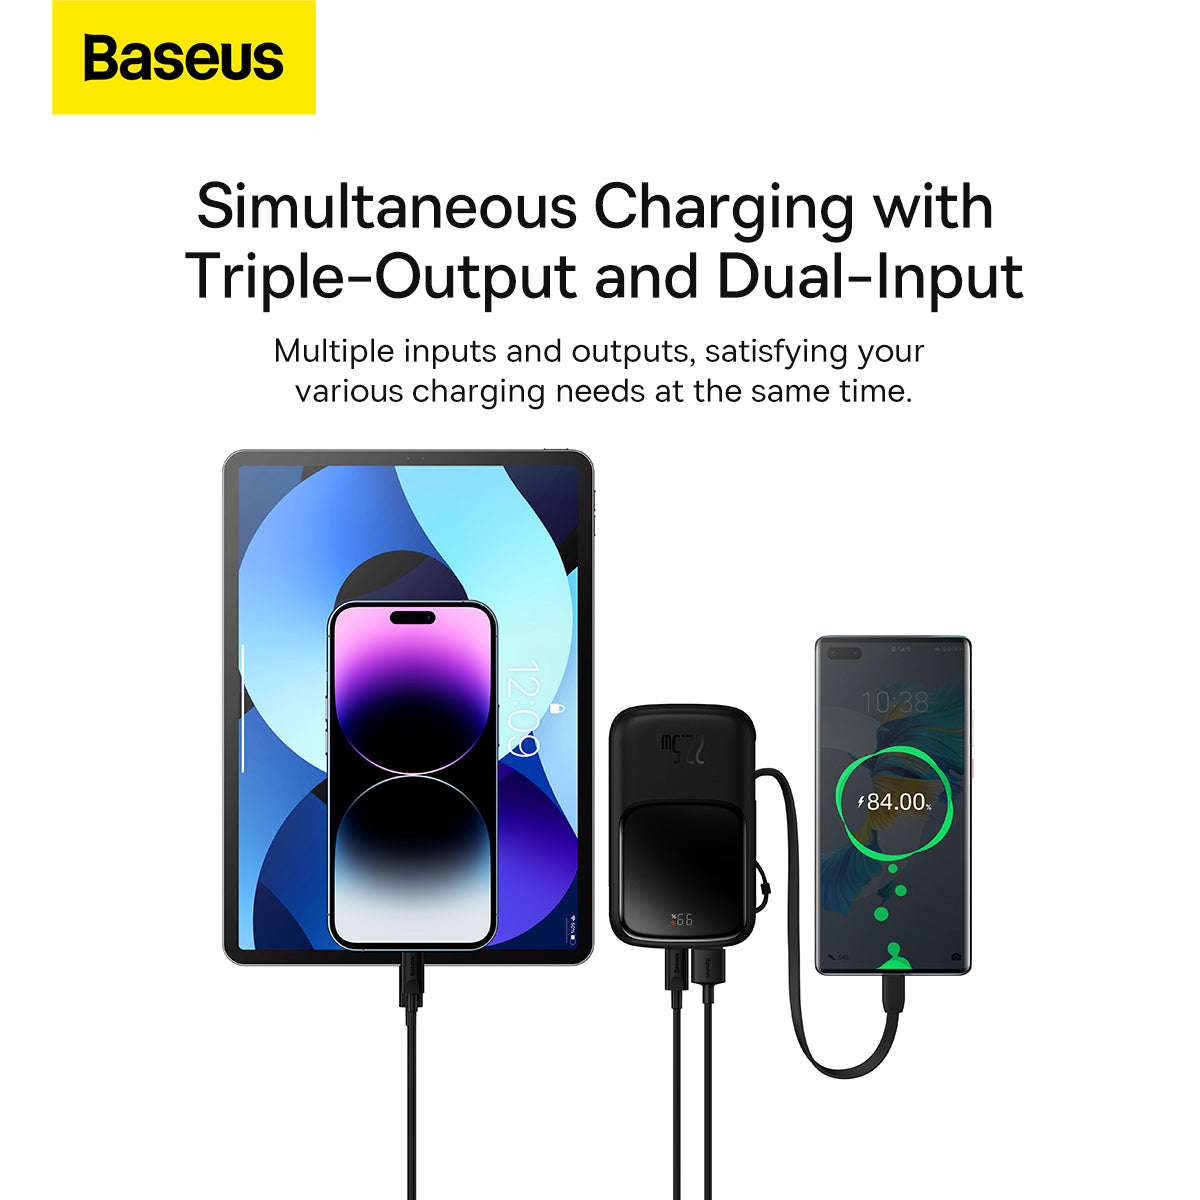 Baseus Qpow Pro Digital Display Fast Charge Power Bank 10000mAh 20W/22.5W